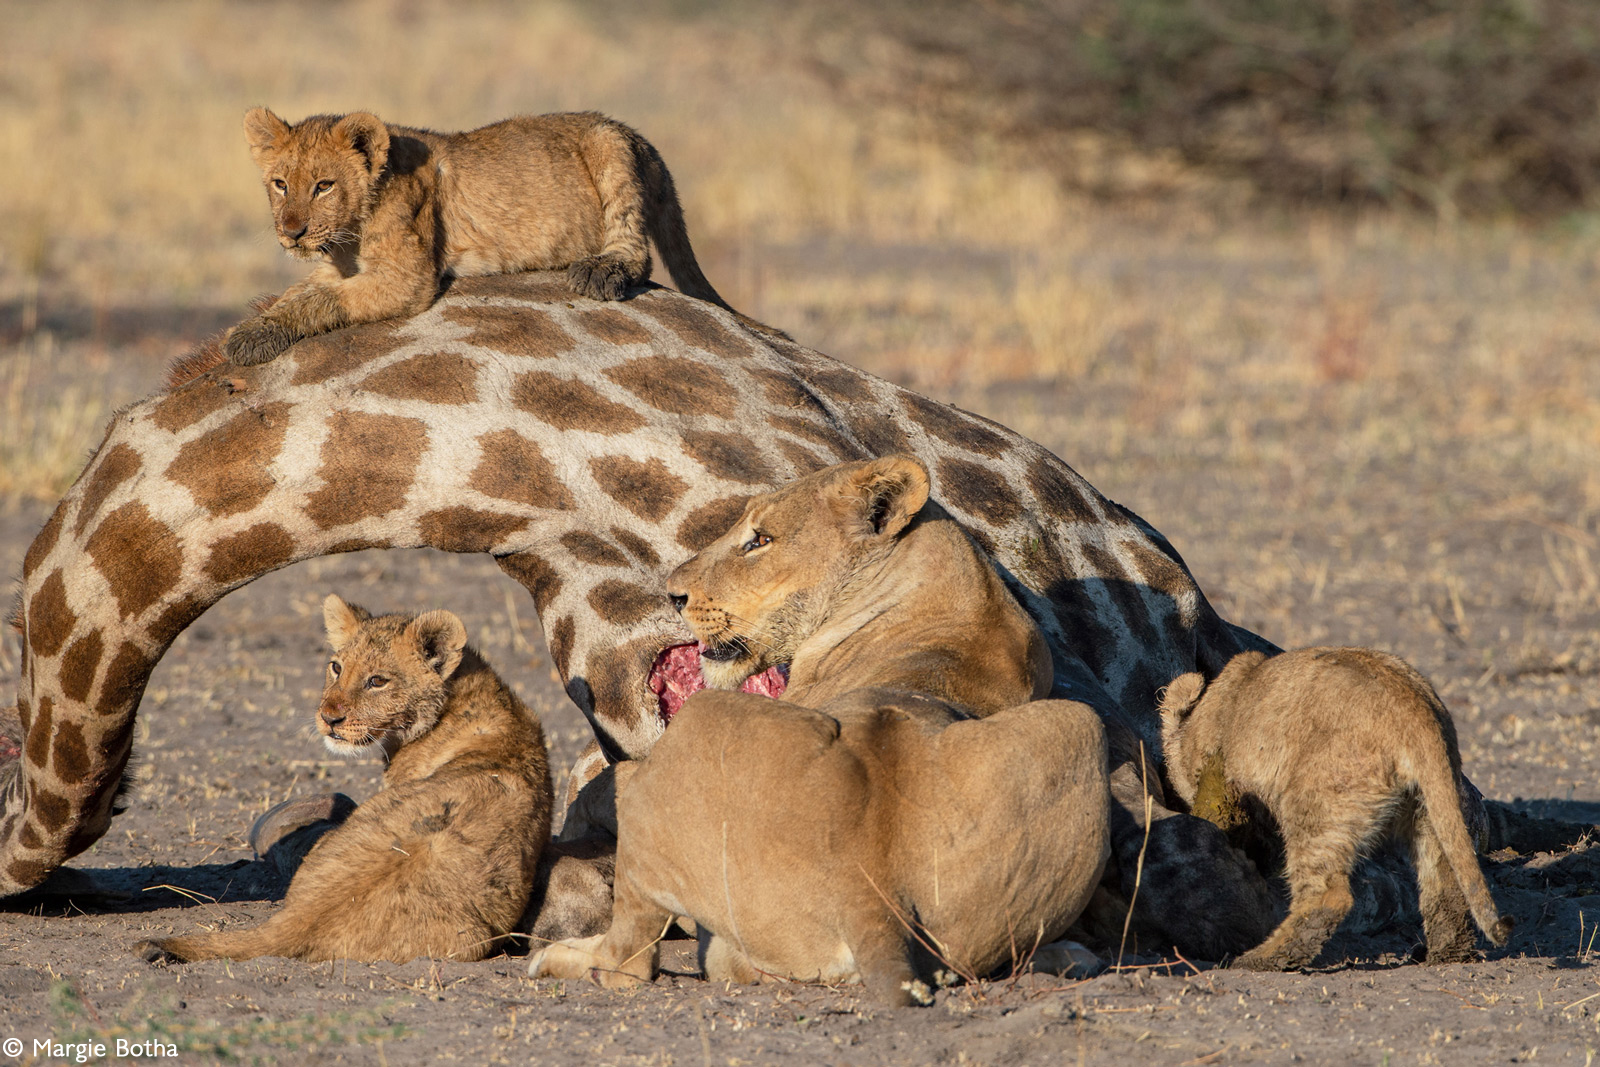 A lioness and her three cubs having a feast at the giraffe carcass. Savuti, Botswana © Margie Botha